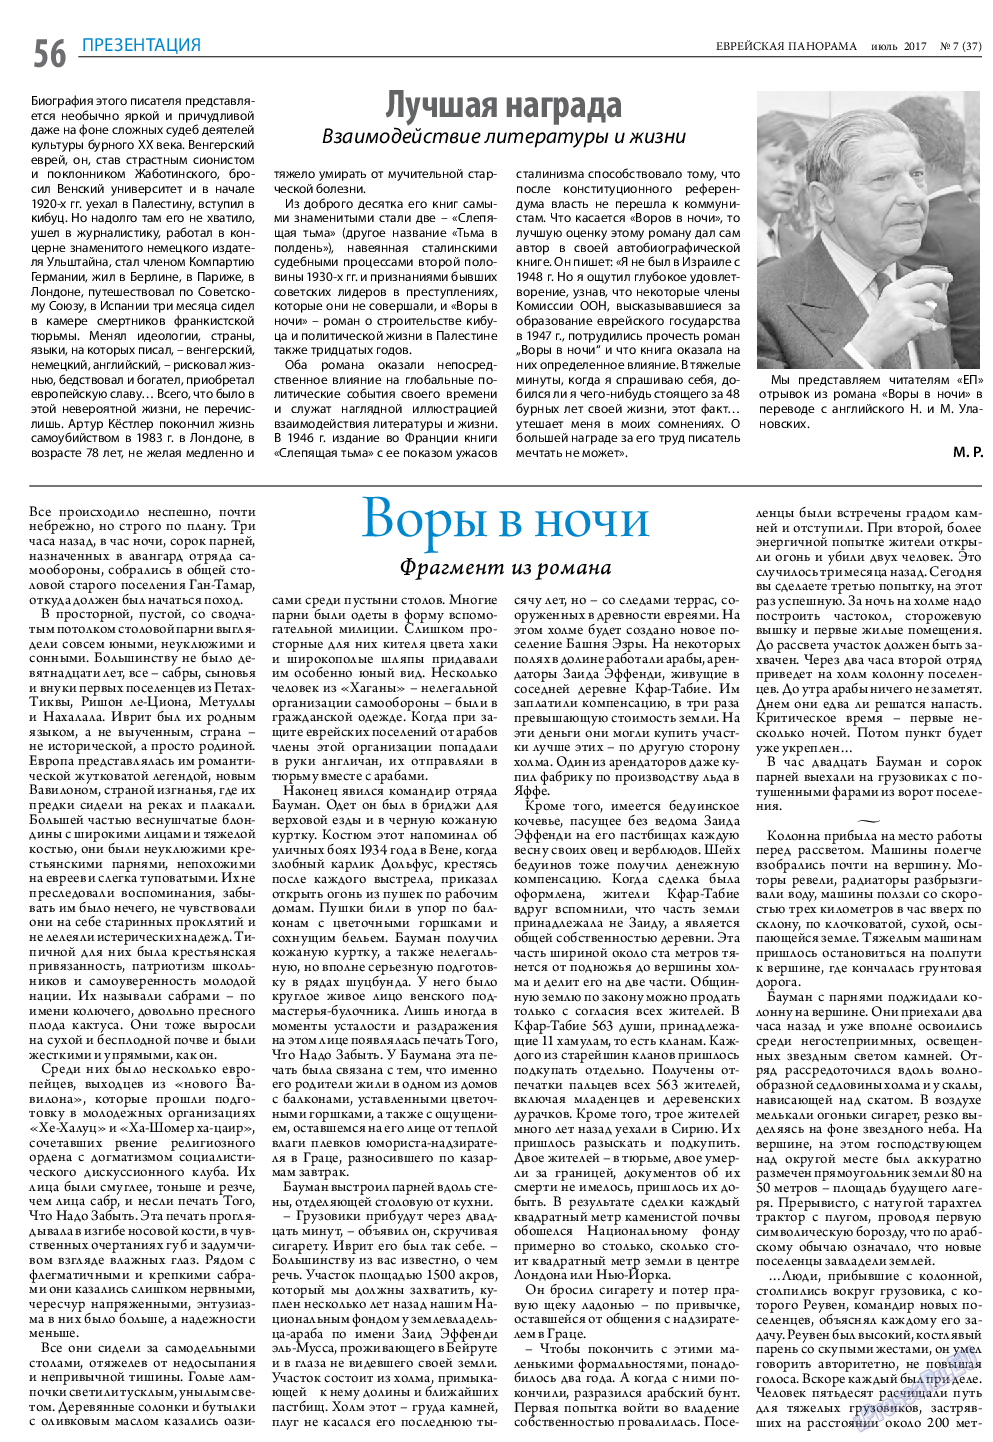 Еврейская панорама, газета. 2017 №7 стр.56